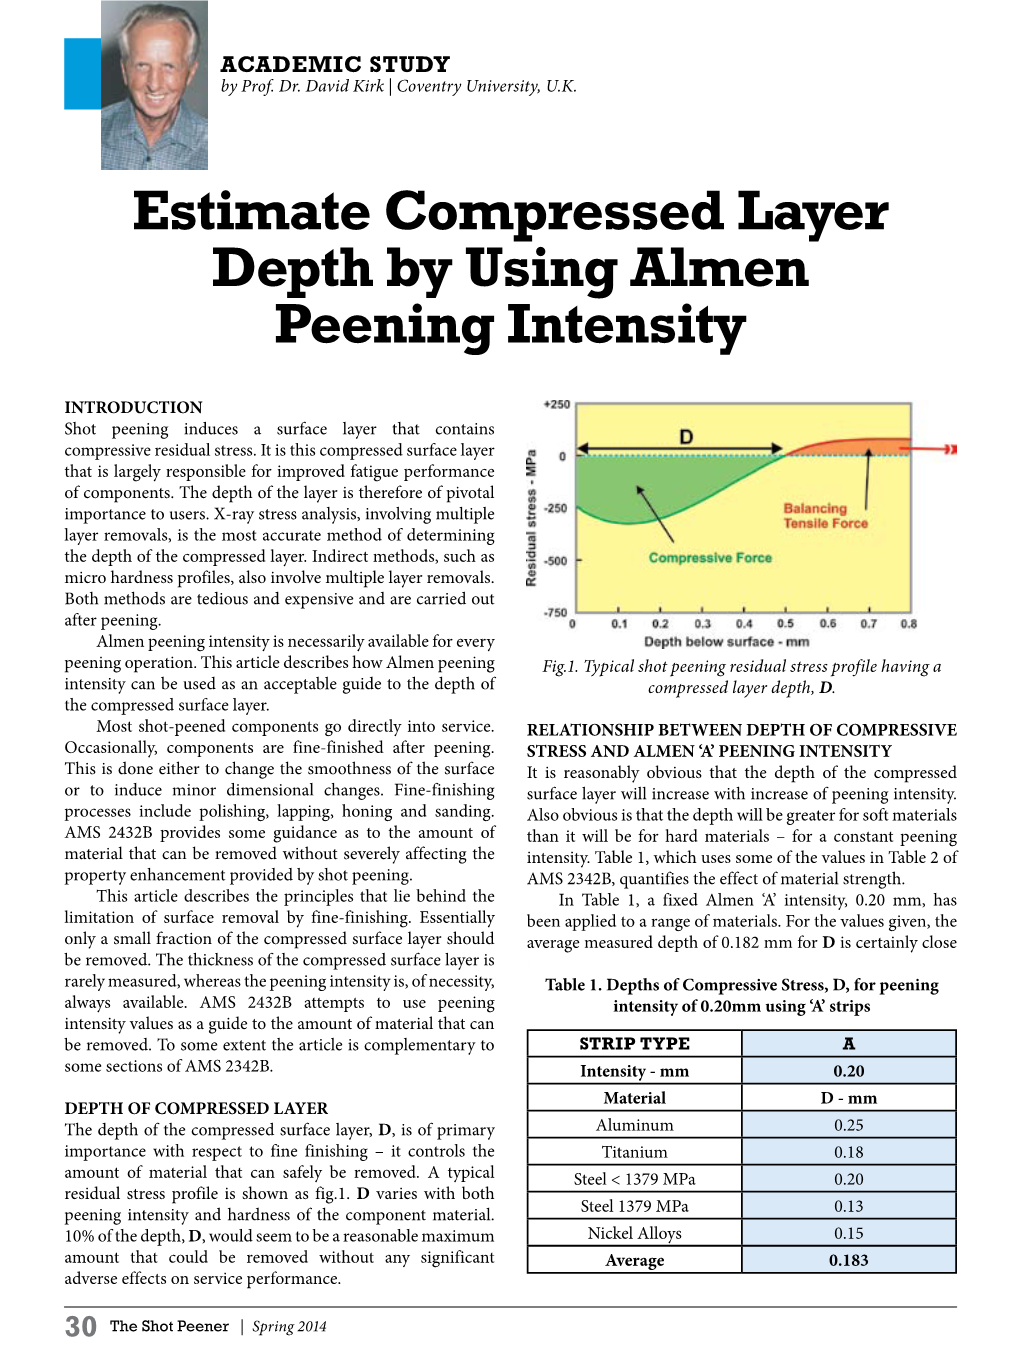 Estimate Compressed Layer Depth by Using Almen Peening Intensity